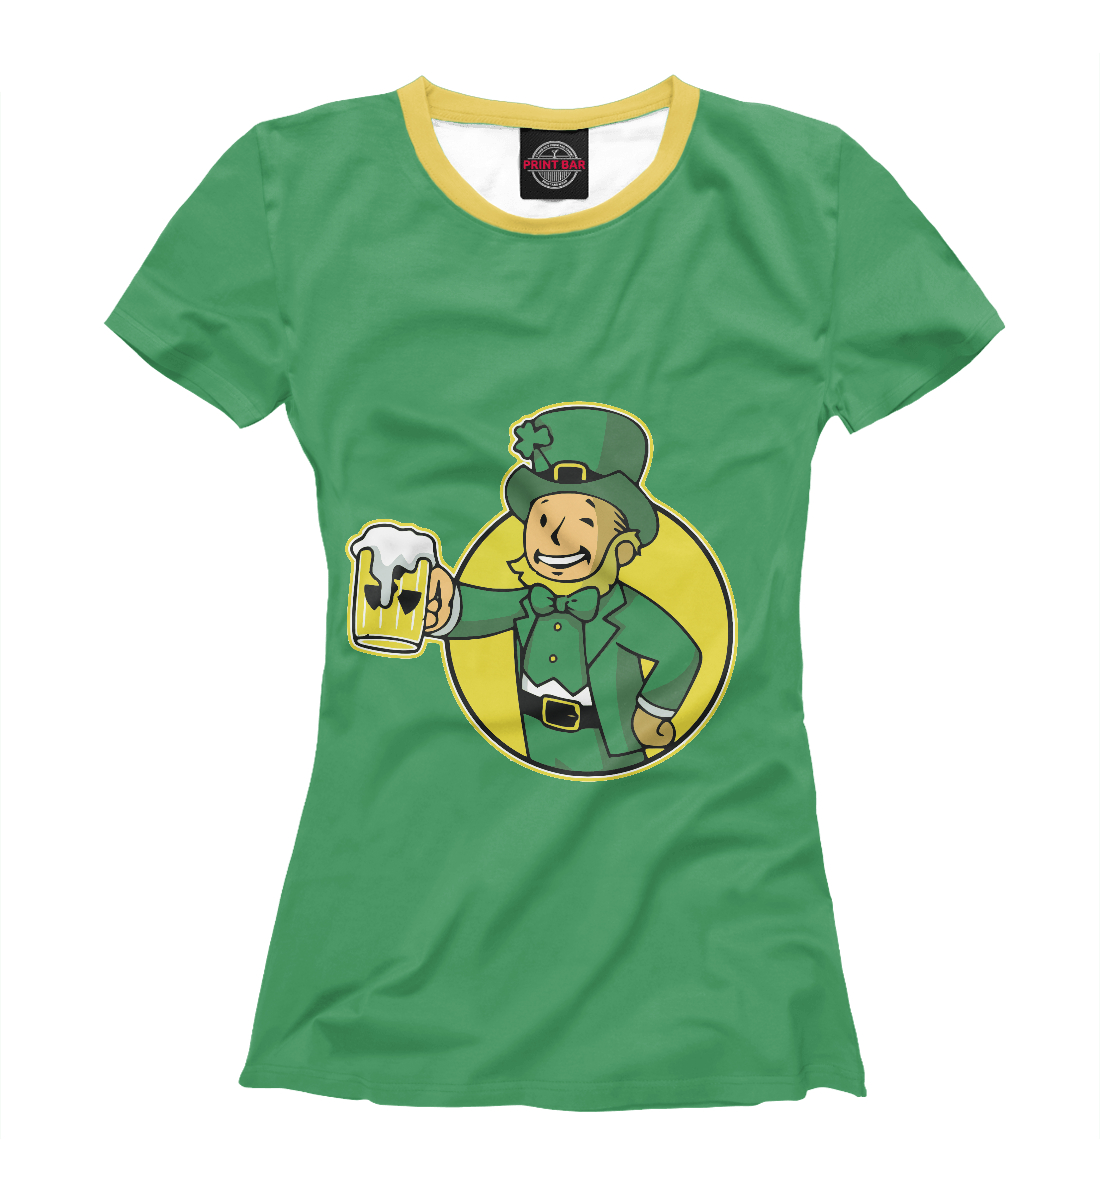 Футболка Irish Vault Boy (St. Patrick) для девочек, артикул: FOT-118777-fut-1mp